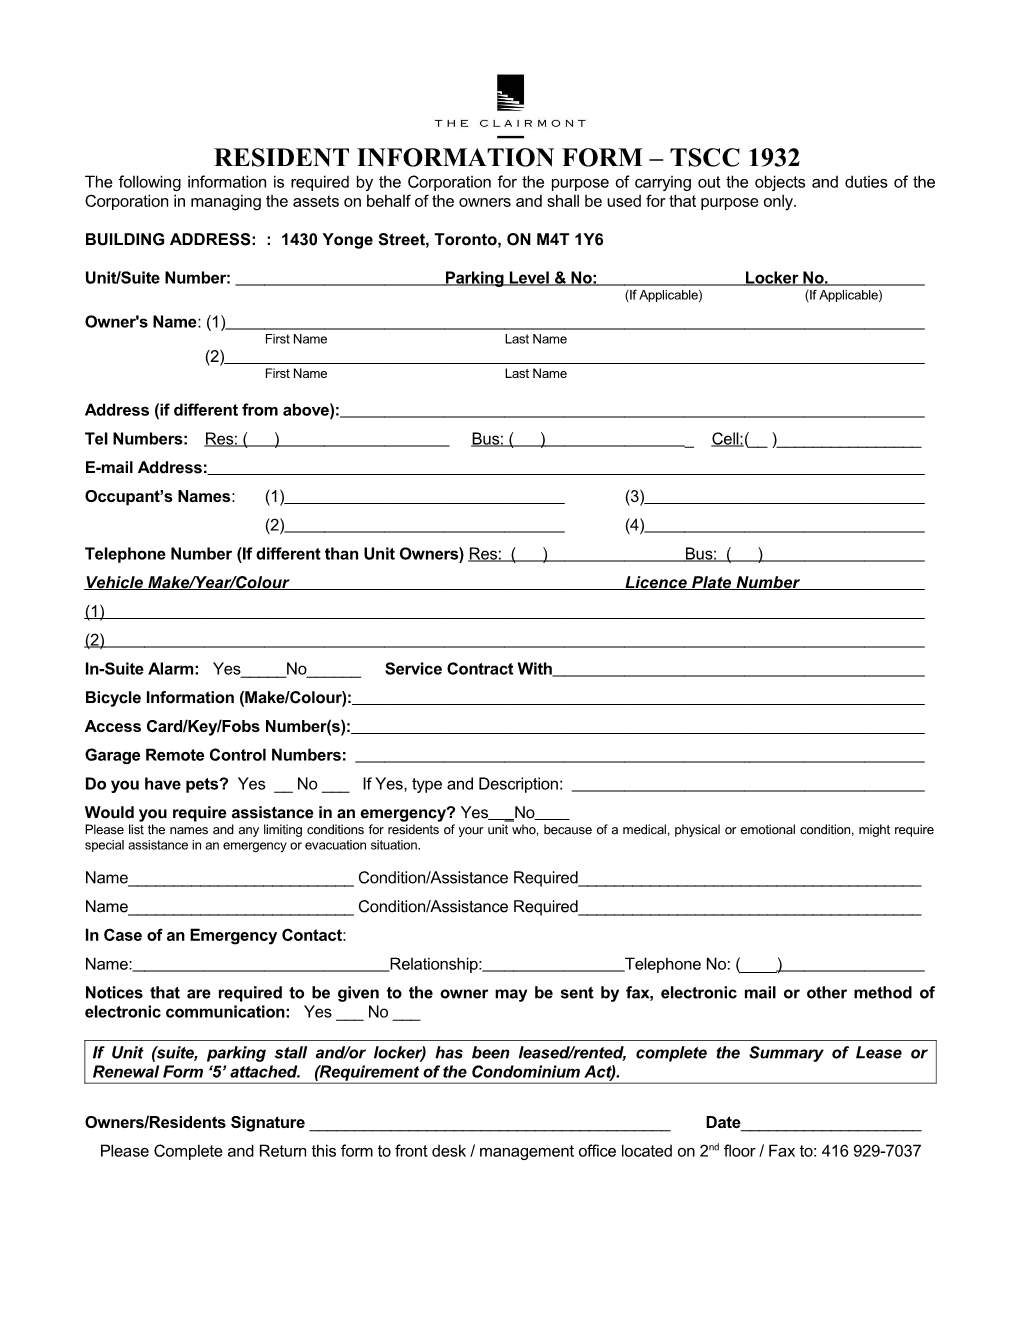 Resident Information Form Tscc 1932